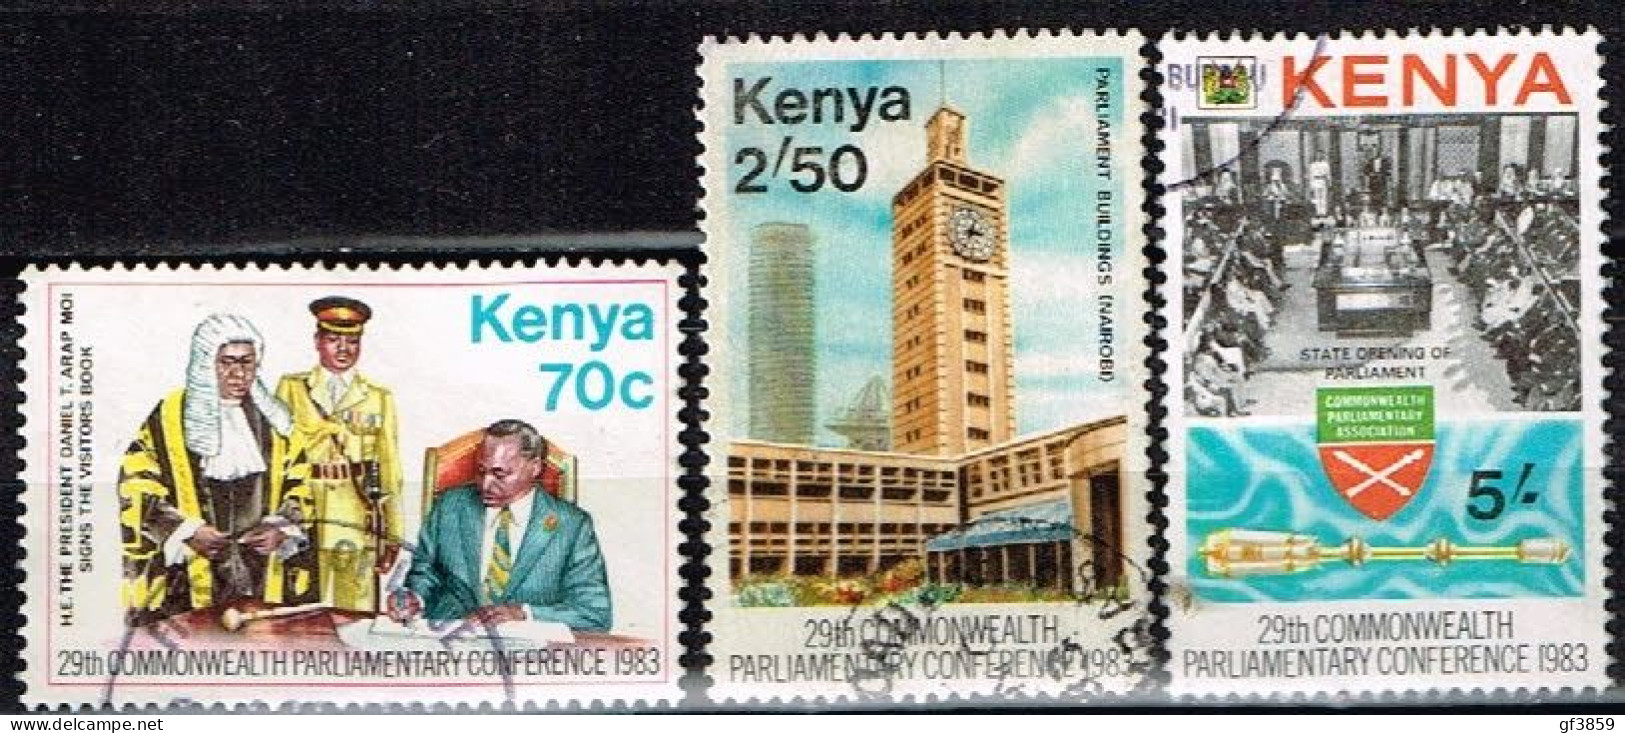 KENYA / Oblitérés/Used / 1983 - Conférence Parlementaire Du Commonwealth - Kenya (1963-...)